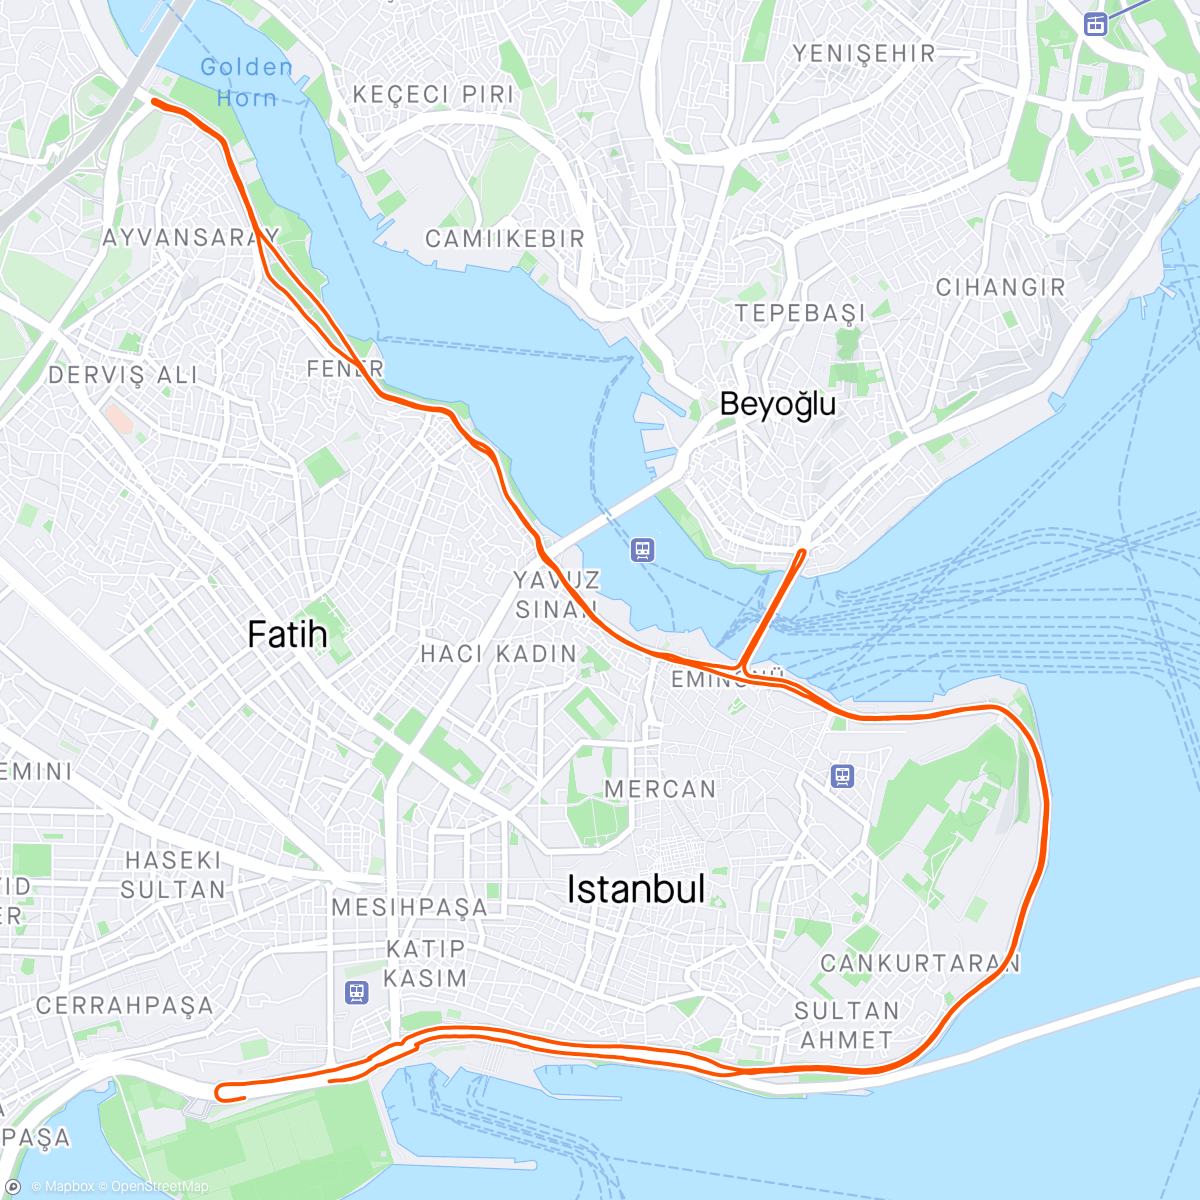 「İstanbul yarı maraton」活動的地圖